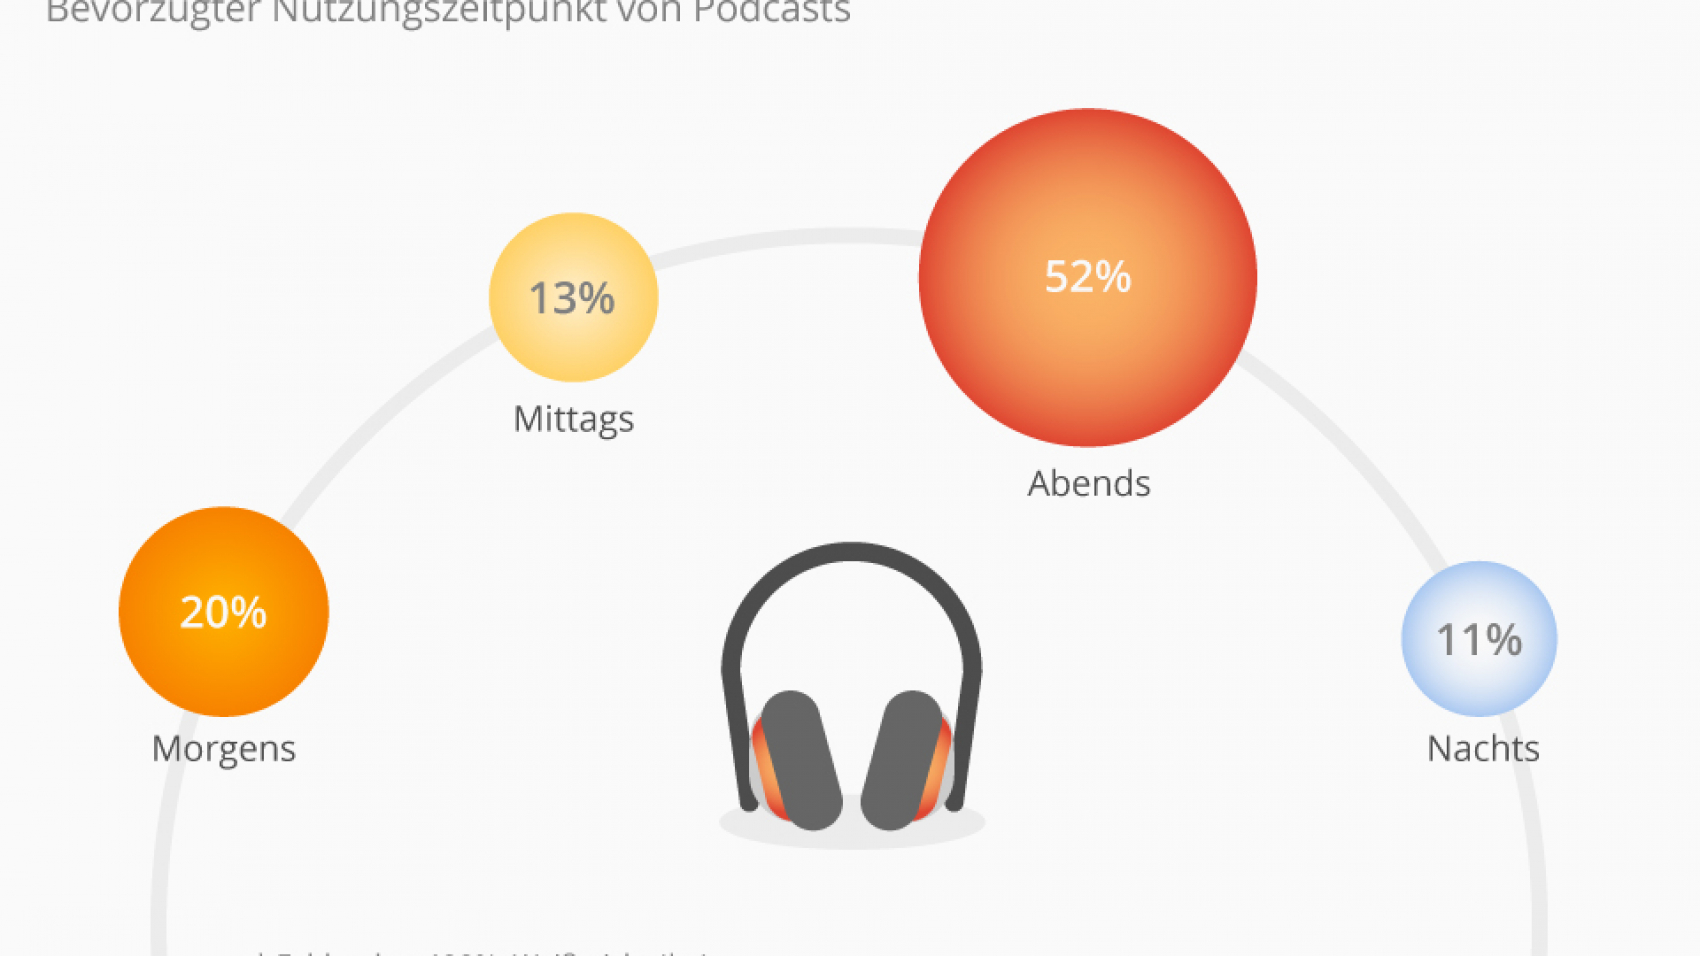 Quelle: https://de.statista.com/infografik/15276/beliebteste-tageszeit-fue-podcasts/